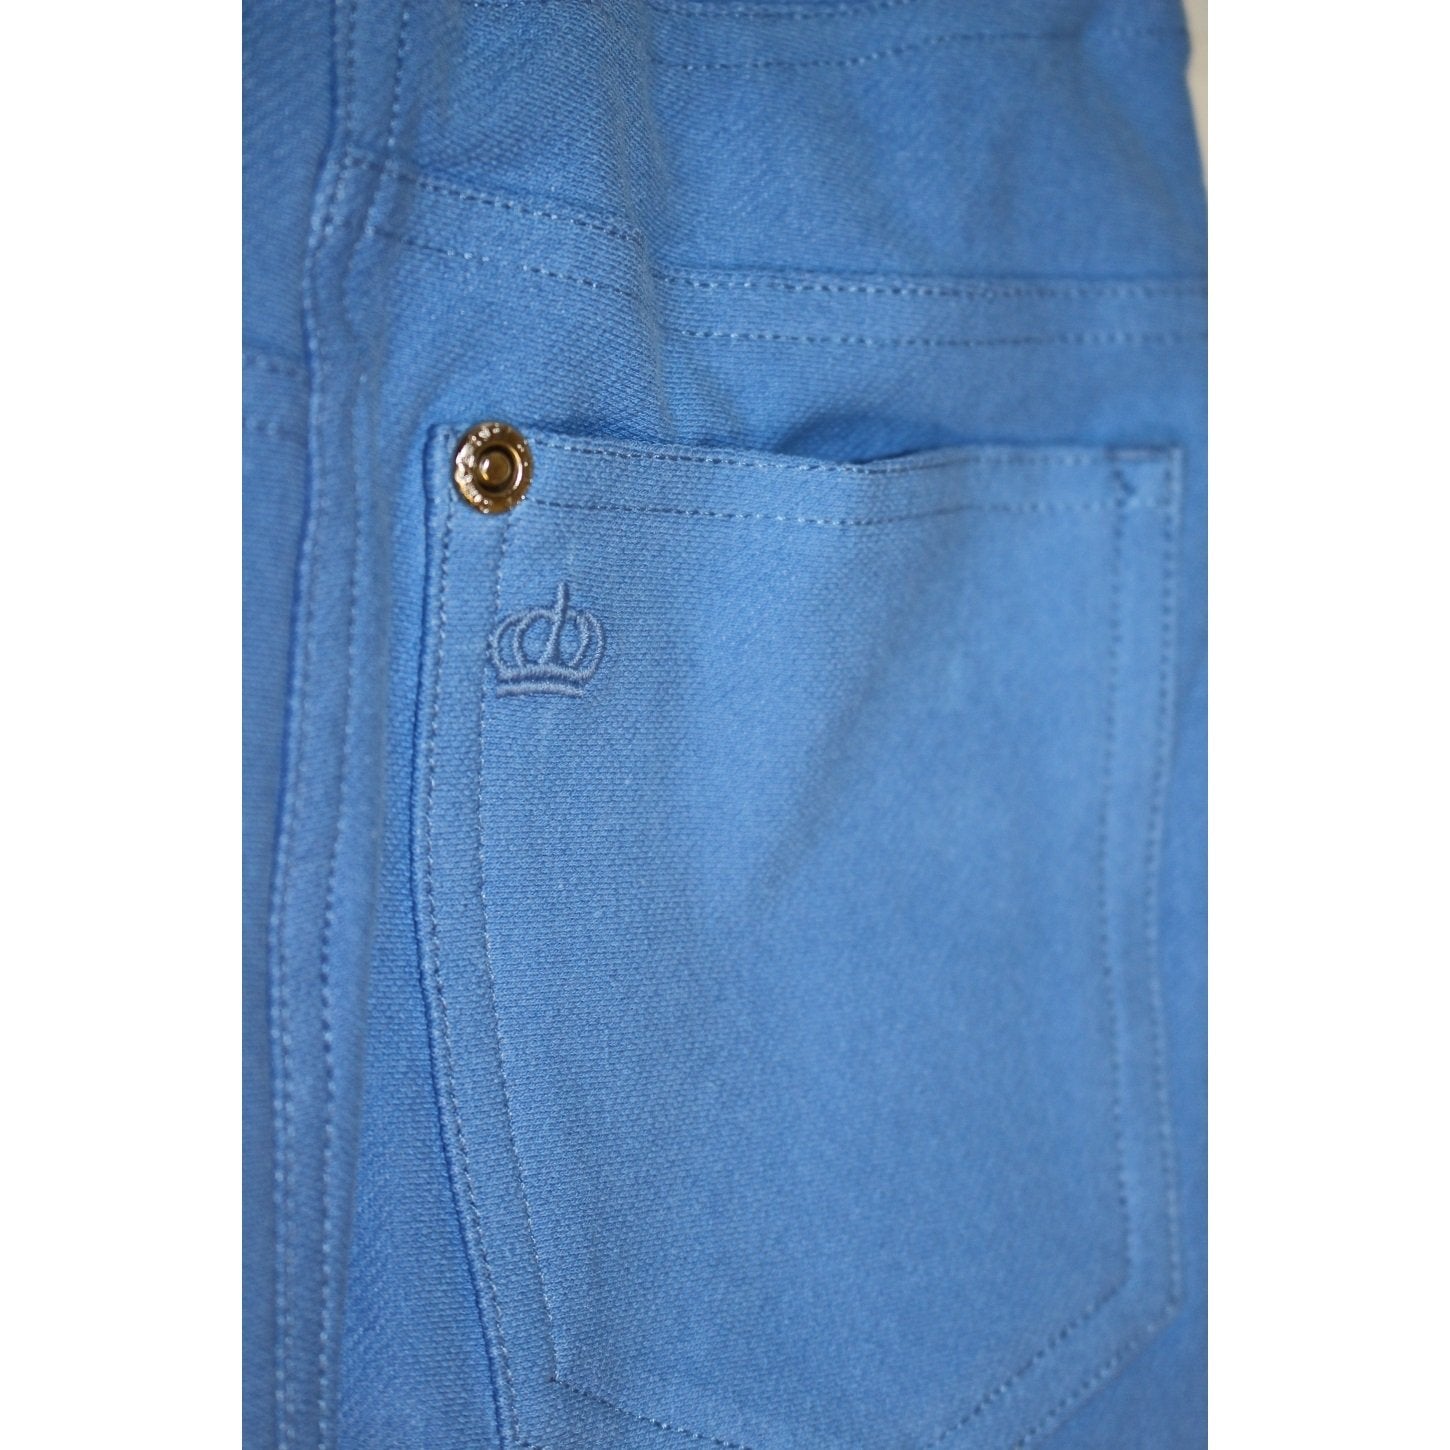 leggings cotton denim Conte Romi blue leggings for women